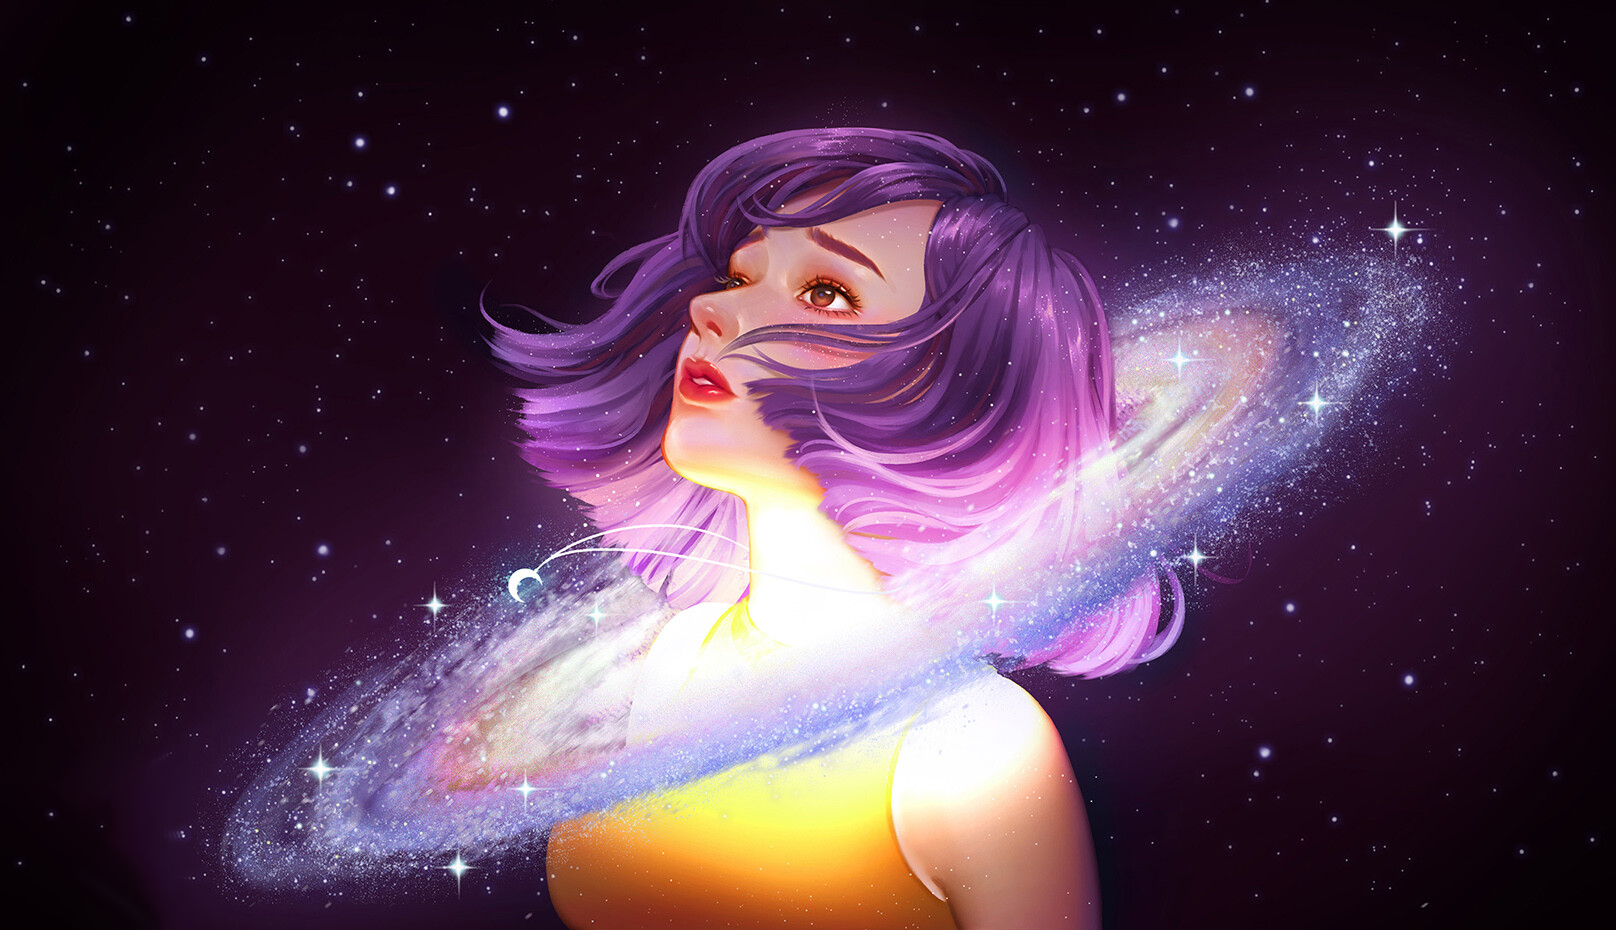 General 1616x930 digital art galaxy nebula women purple background purple hair stars yellow shirt